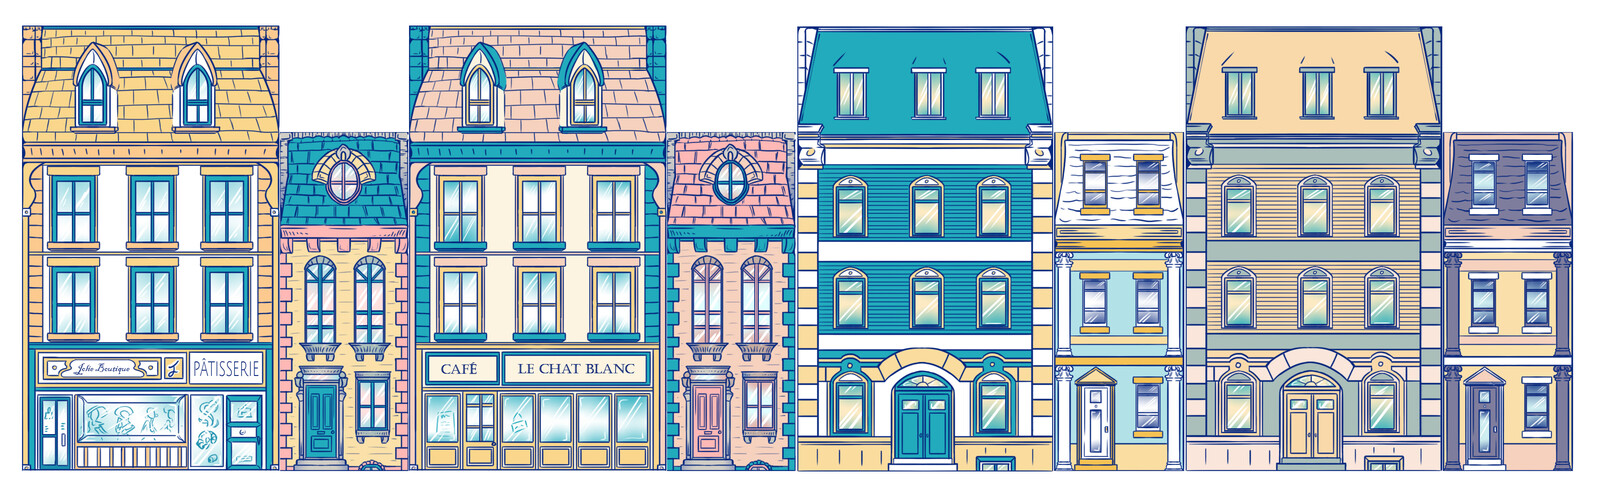 Variation of background buildings.